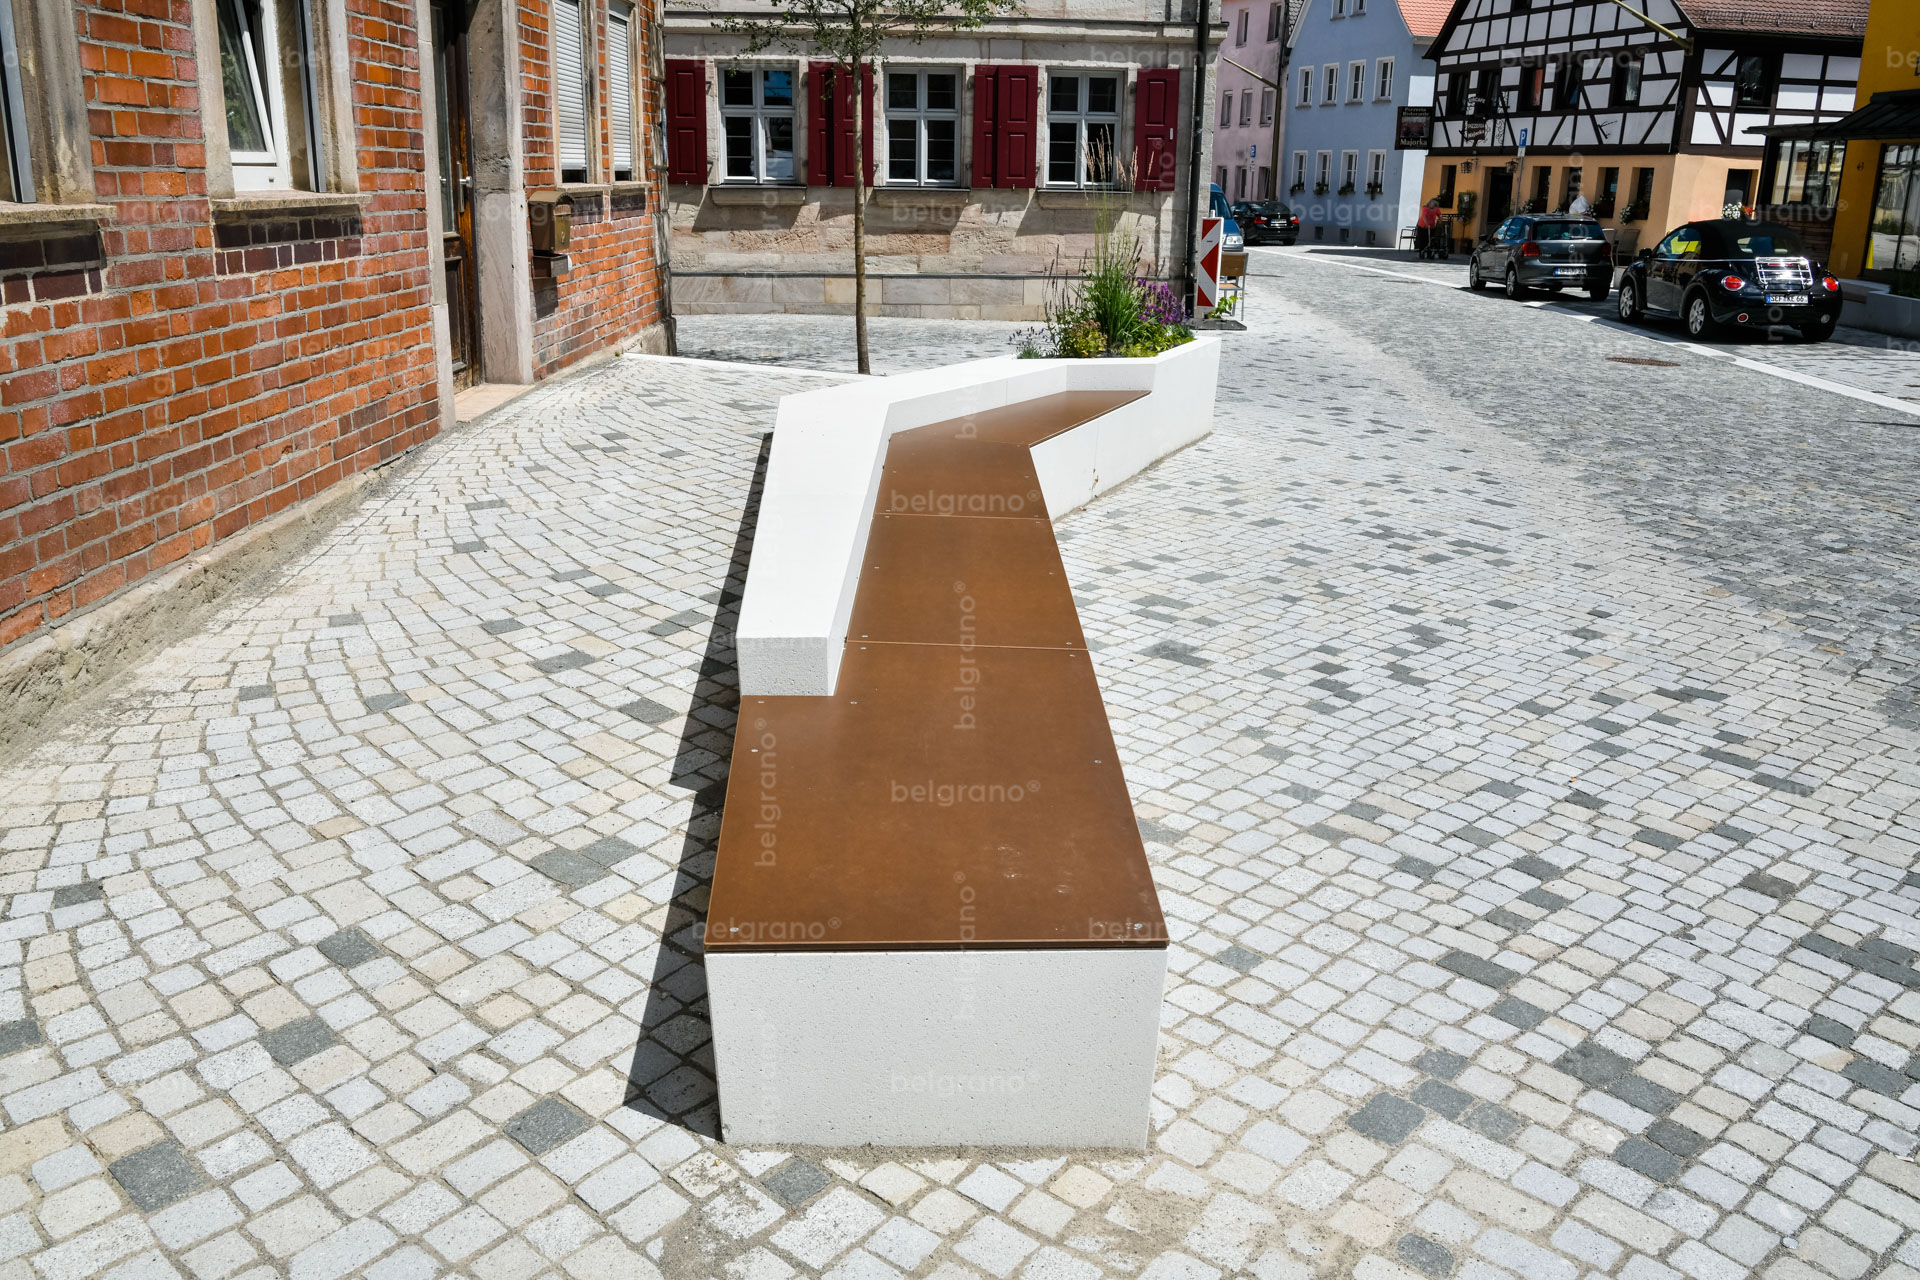 Individually designed street furniture invites to take a break